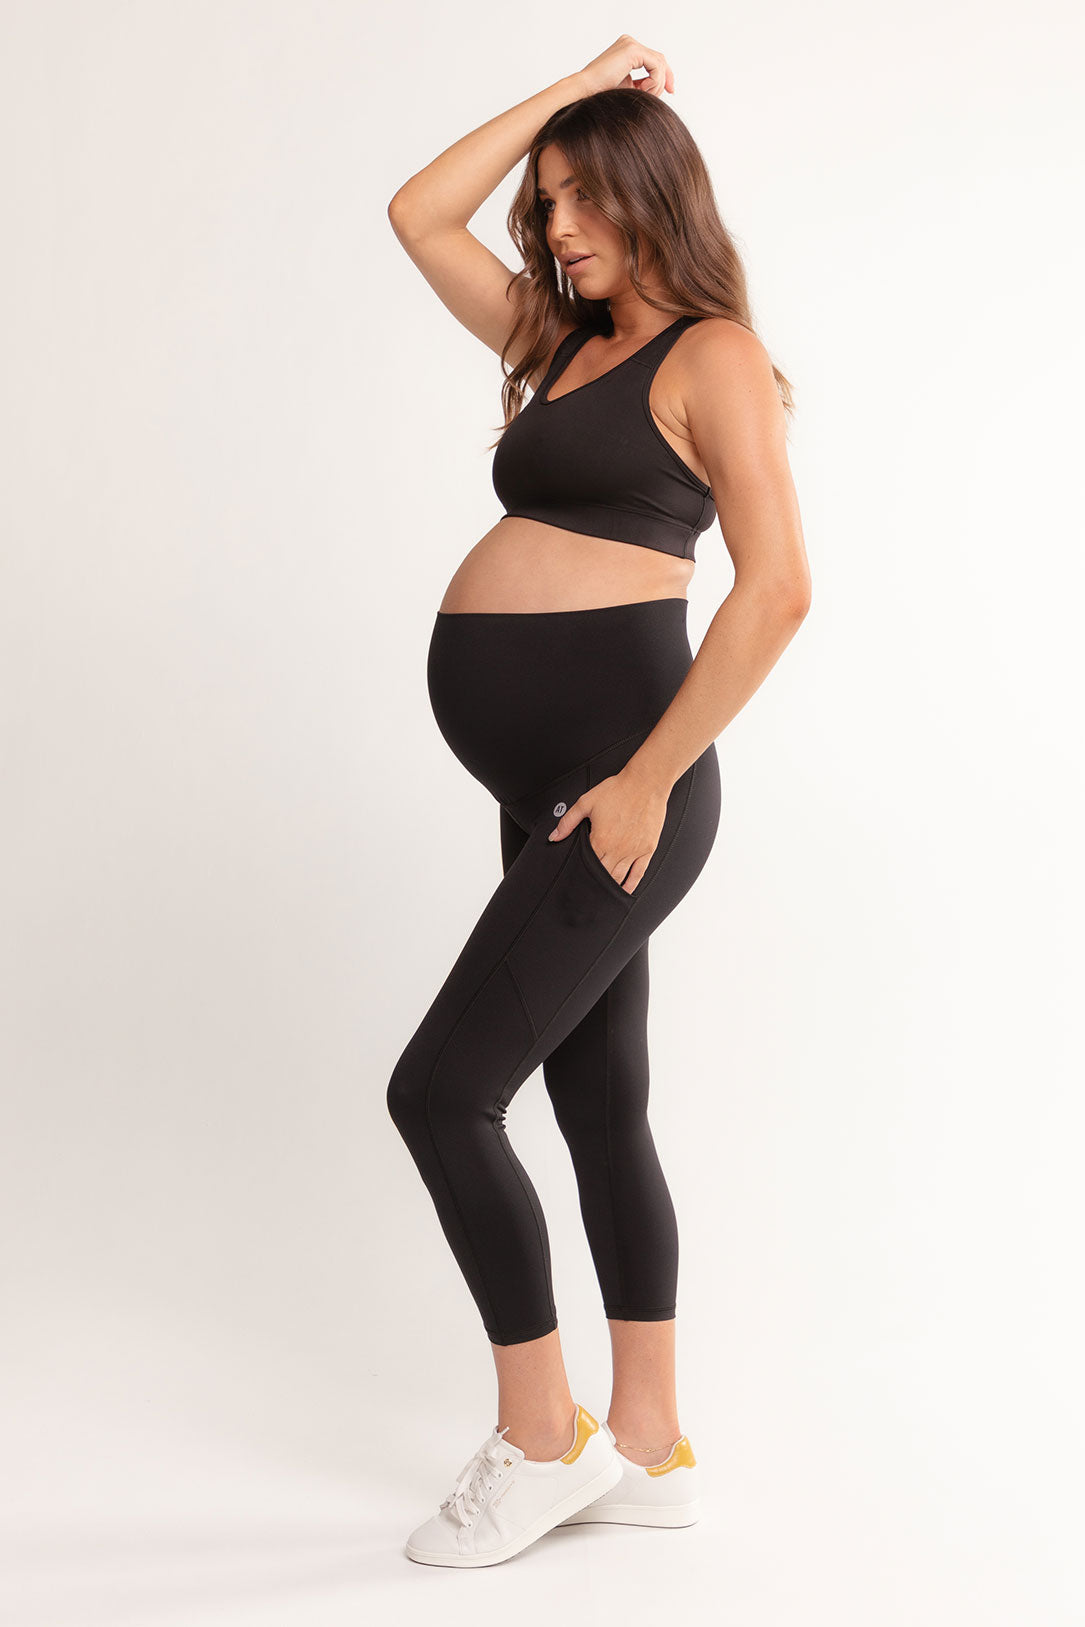 The Leggings Getting Me Through Pregnancy | Alyson Haley